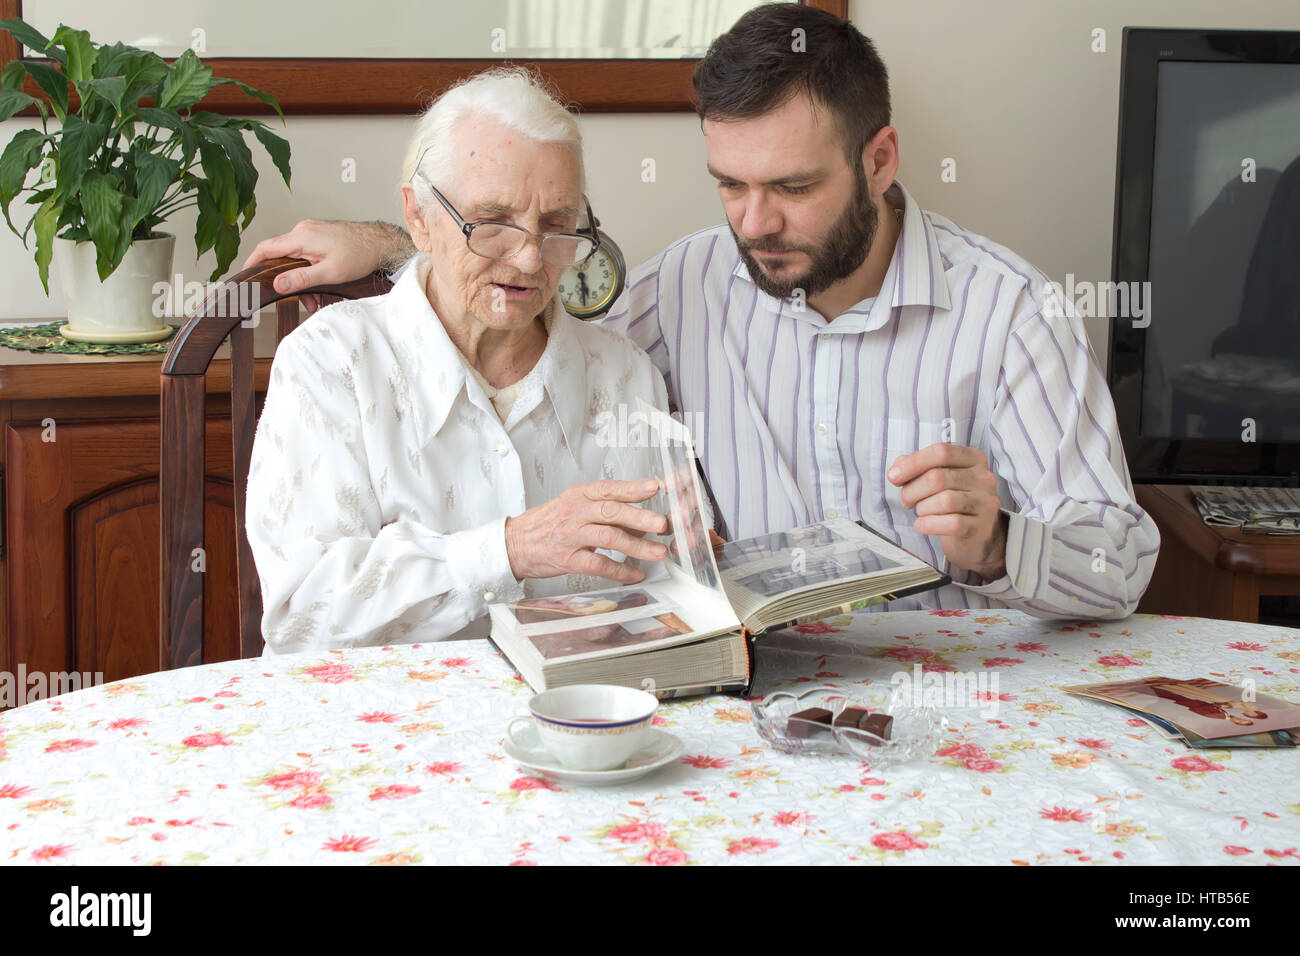 Großmutter mit Enkel erinnern alte Zeiten beobachten Fotoalbum.  Enkel Omas Fotoalbum zeigen. Familientreffen. Stockfoto